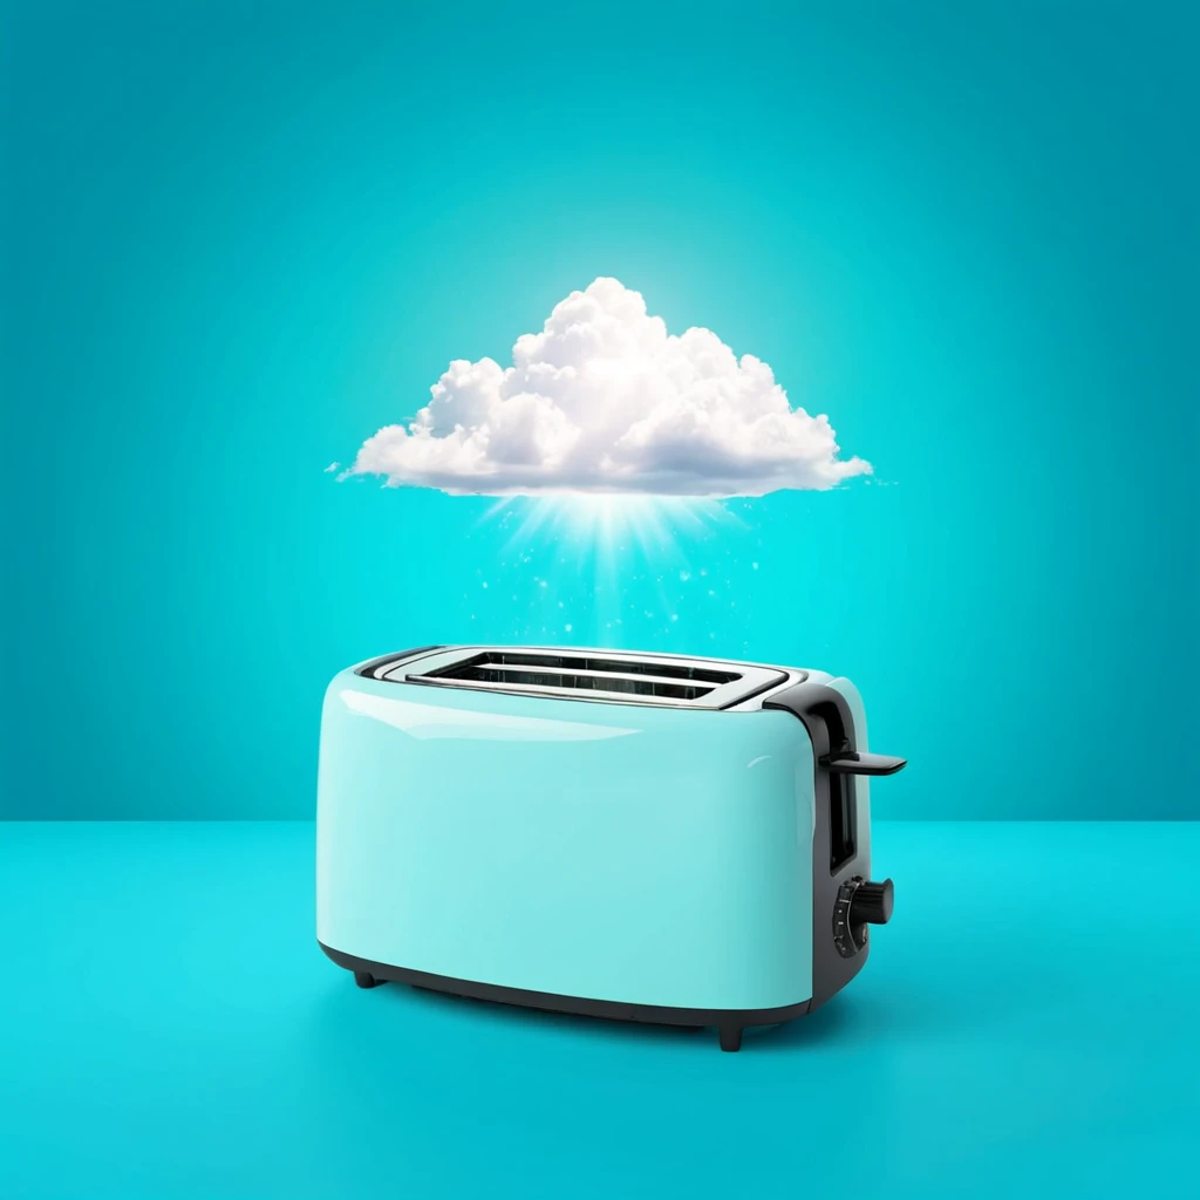 (toaster showcase) <lora:48_toaster_showcase:1.1>
Teal background,
high quality, professional, highres, amazing, dramatic,...